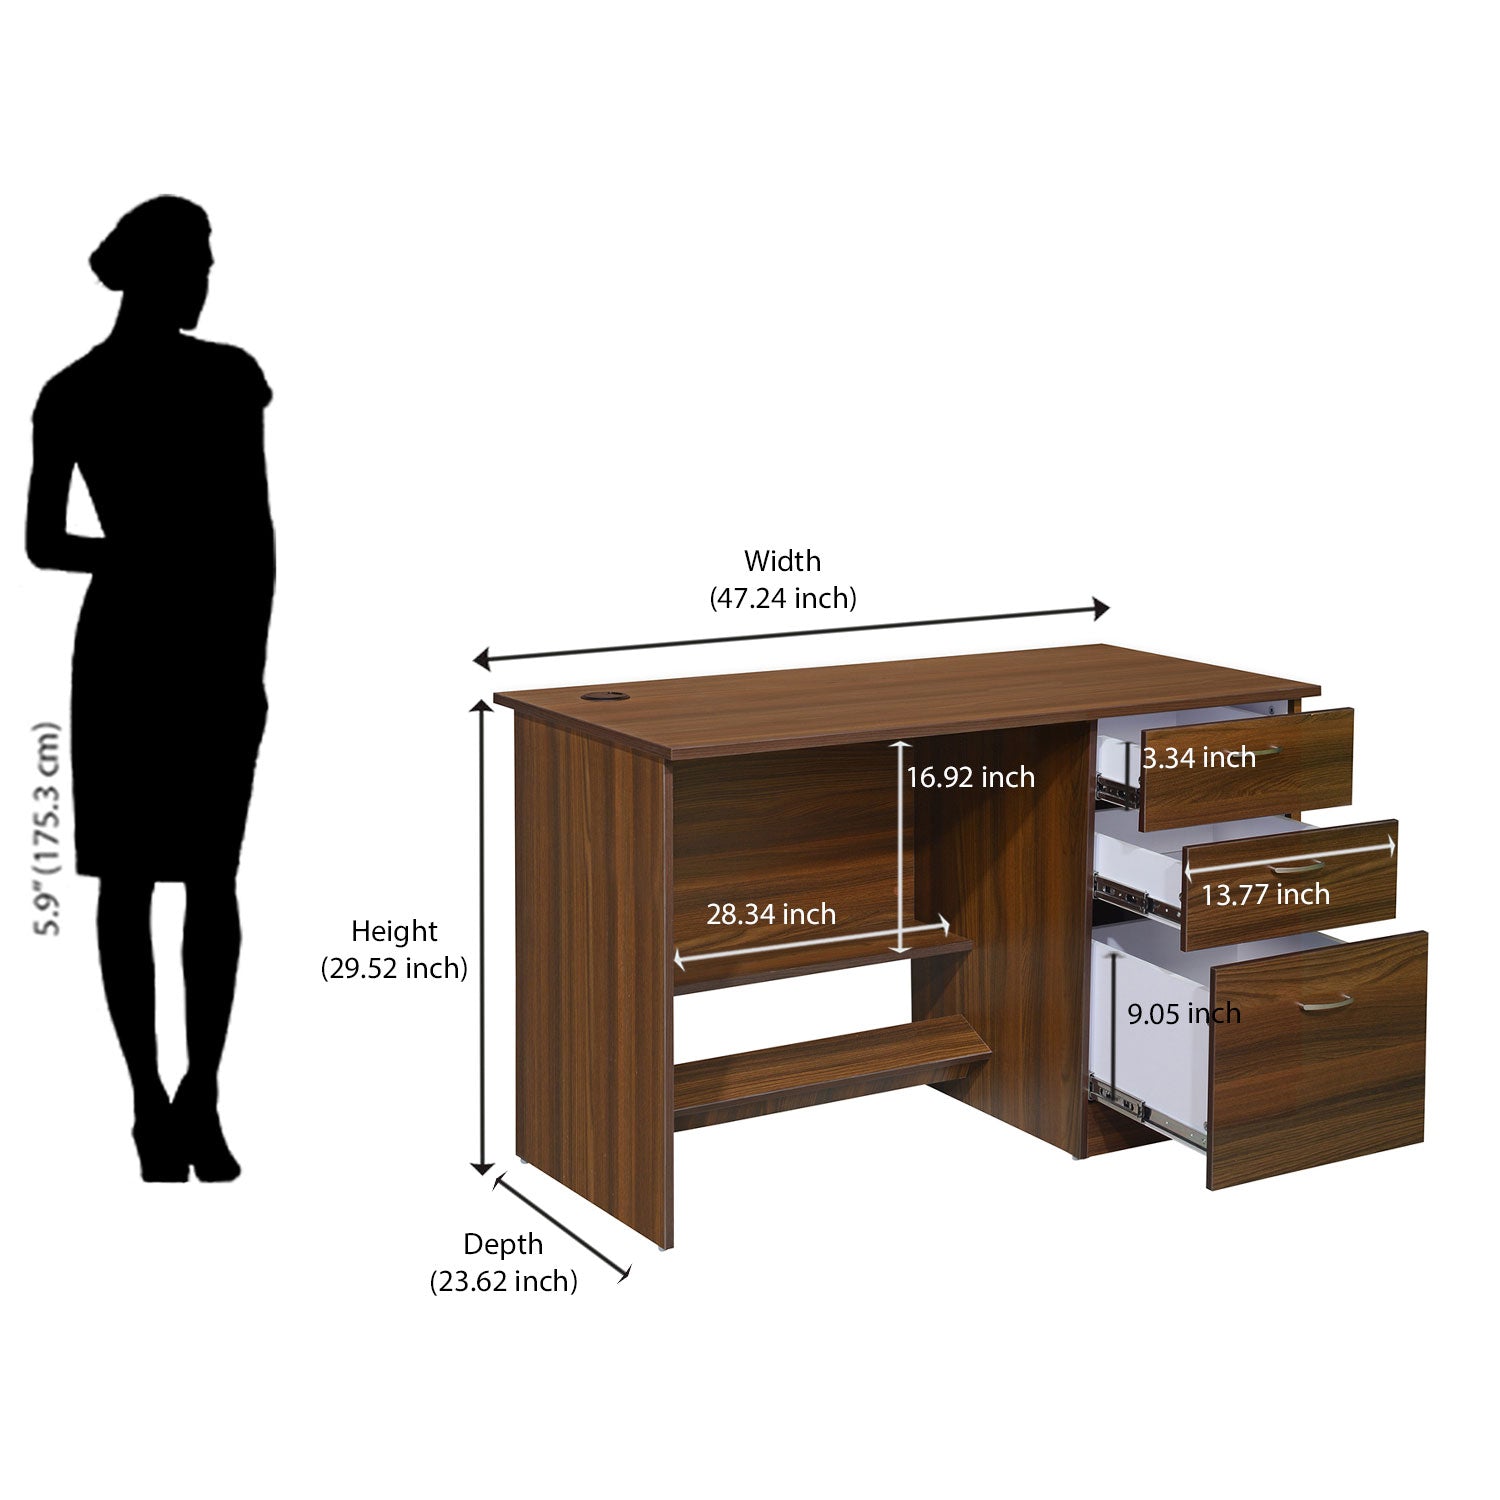 Buy Scholar Study Desk (Brown)Online- At Home by Nilkamal